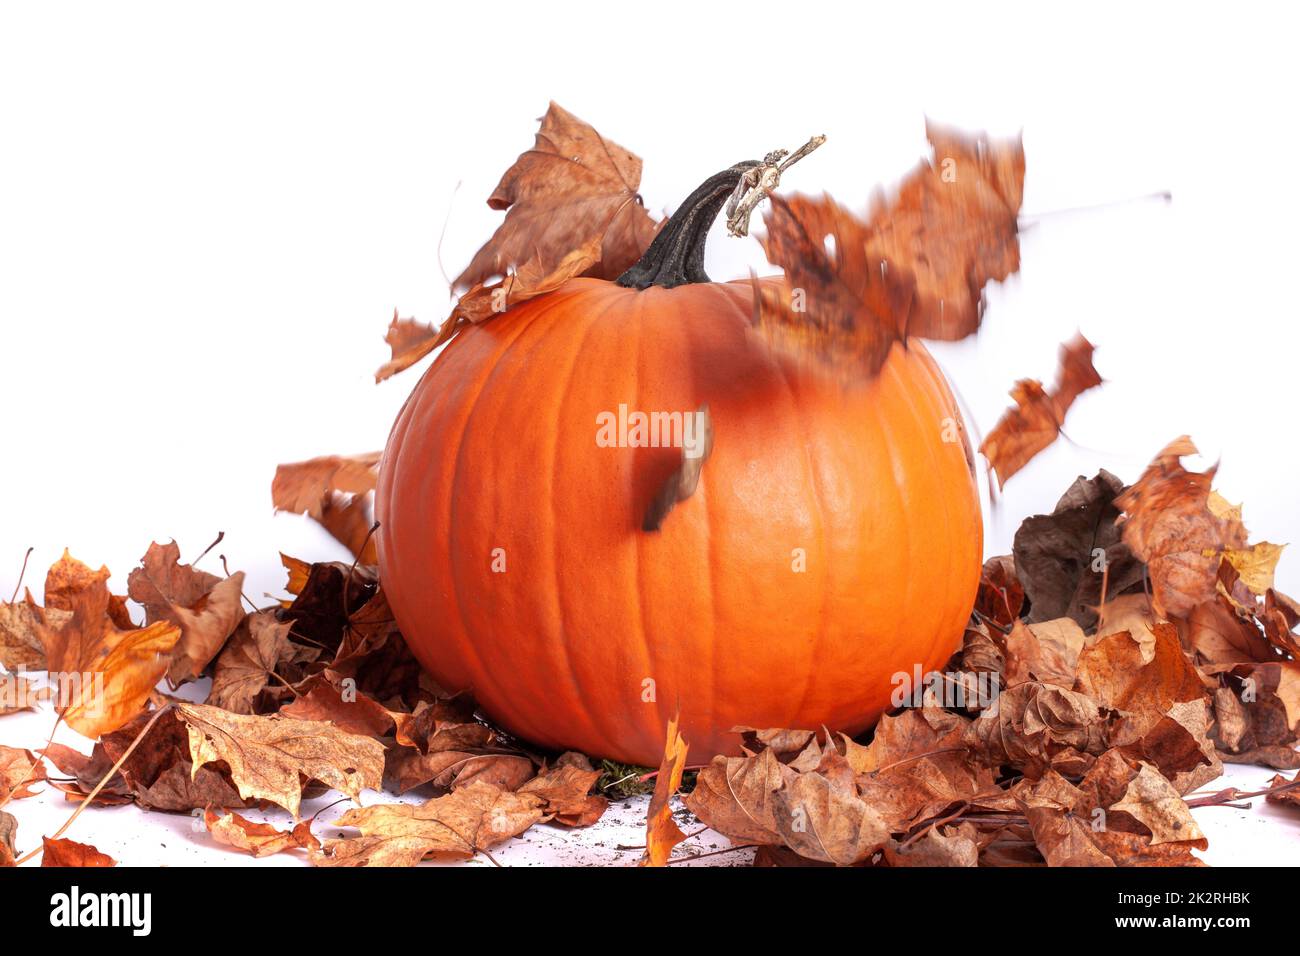 Halloween pumpkin with falling autumn leaves Stock Photo